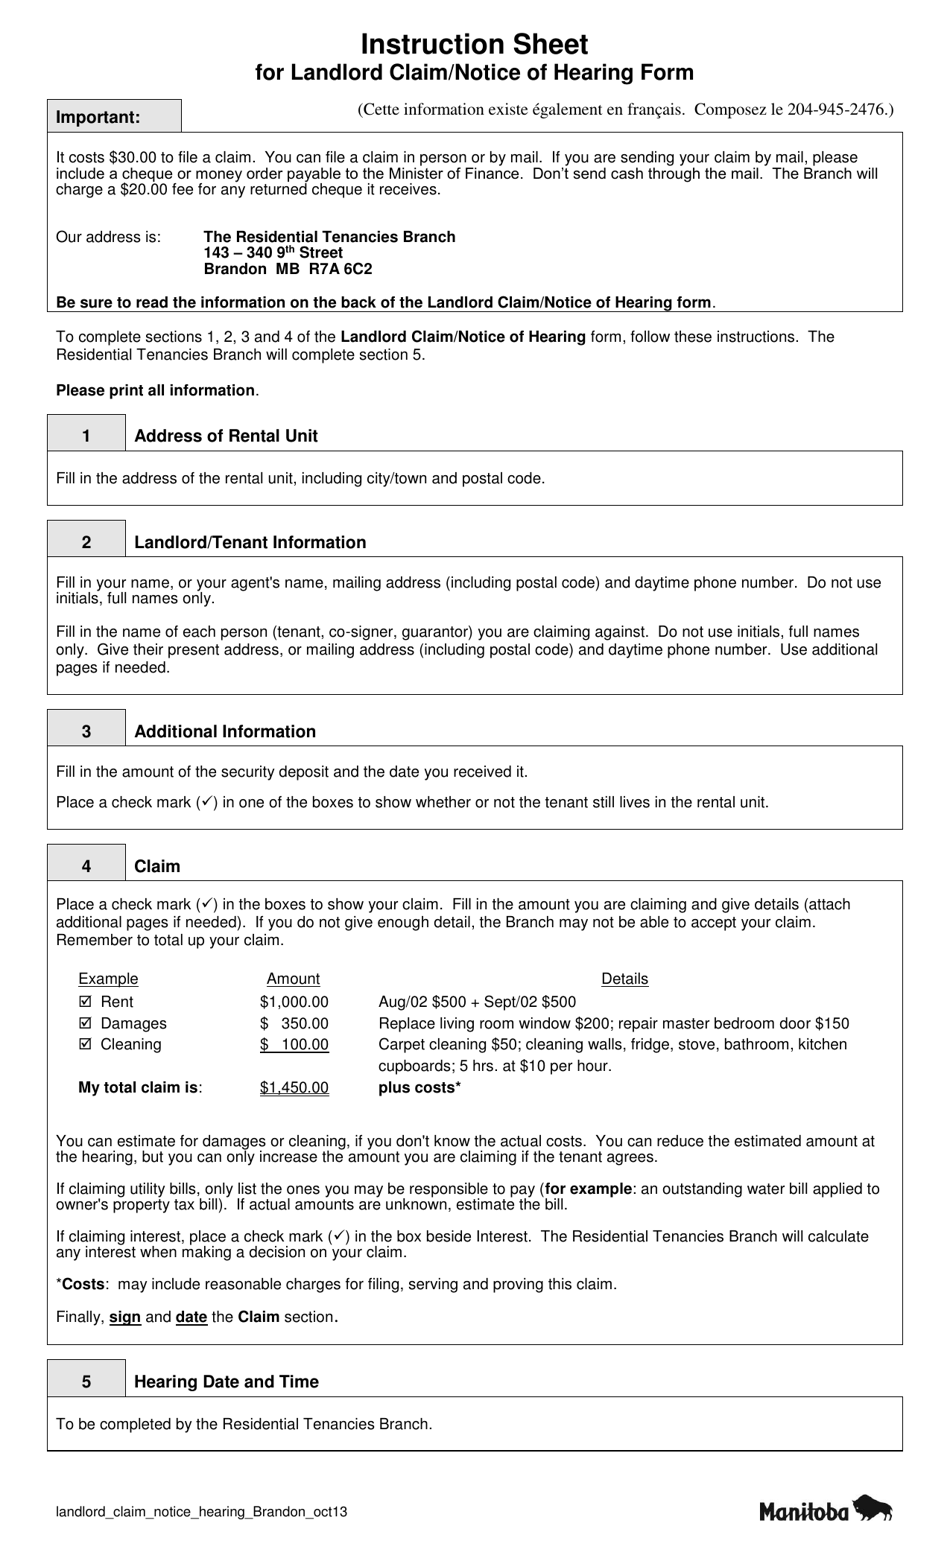 Landlord Claim / Notice of Hearing Form - Brandon - Manitoba, Canada, Page 1